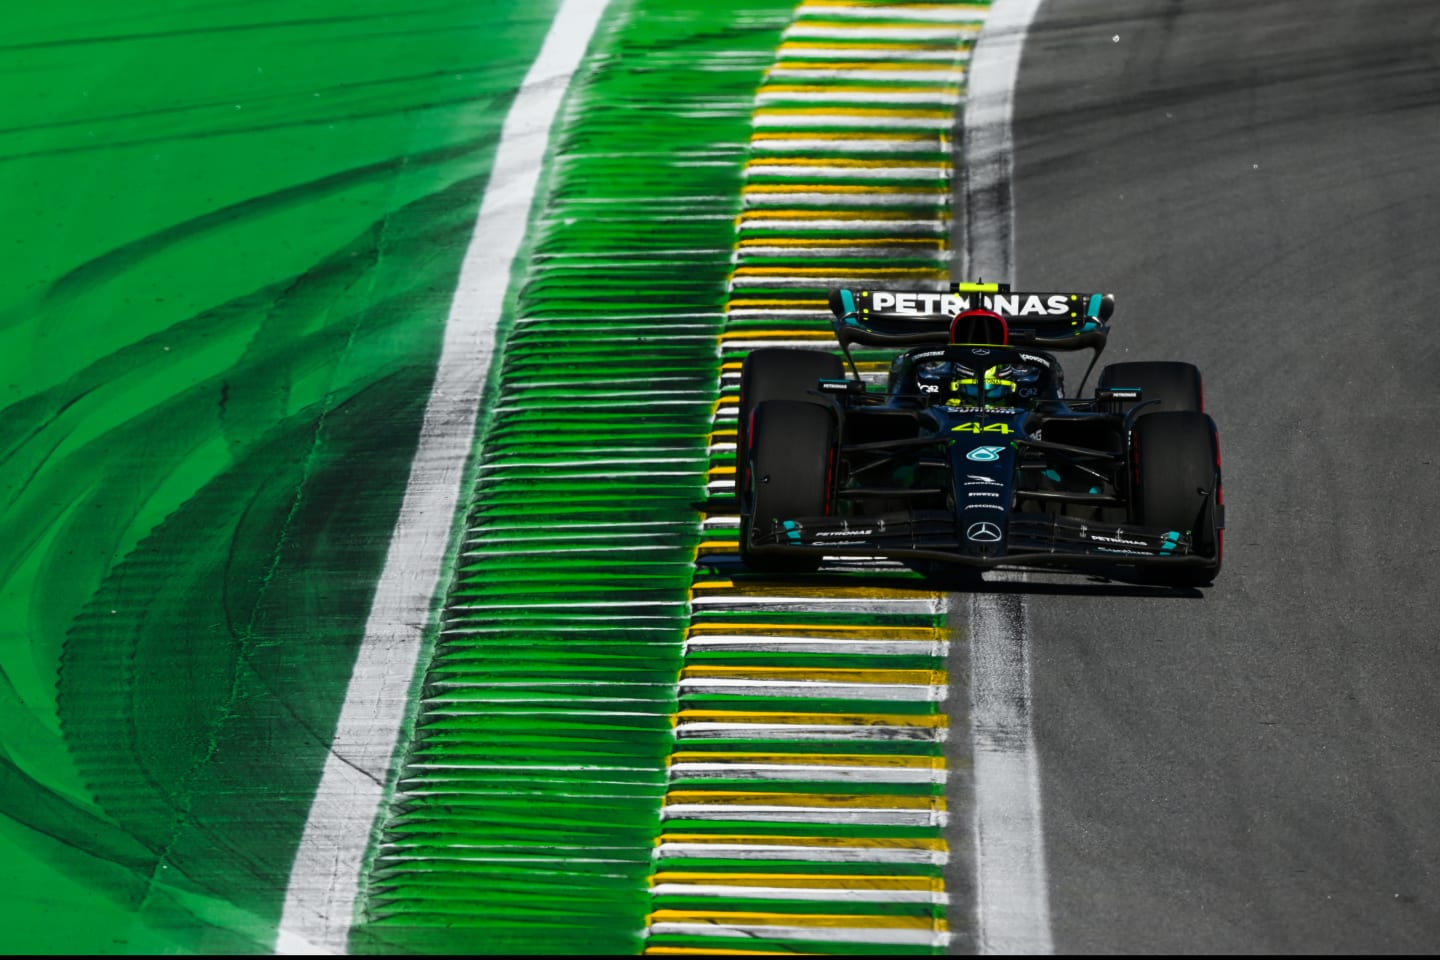 SAO PAULO, BRAZIL - NOVEMBER 04: Lewis Hamilton of Great Britain driving the (44) Mercedes AMG